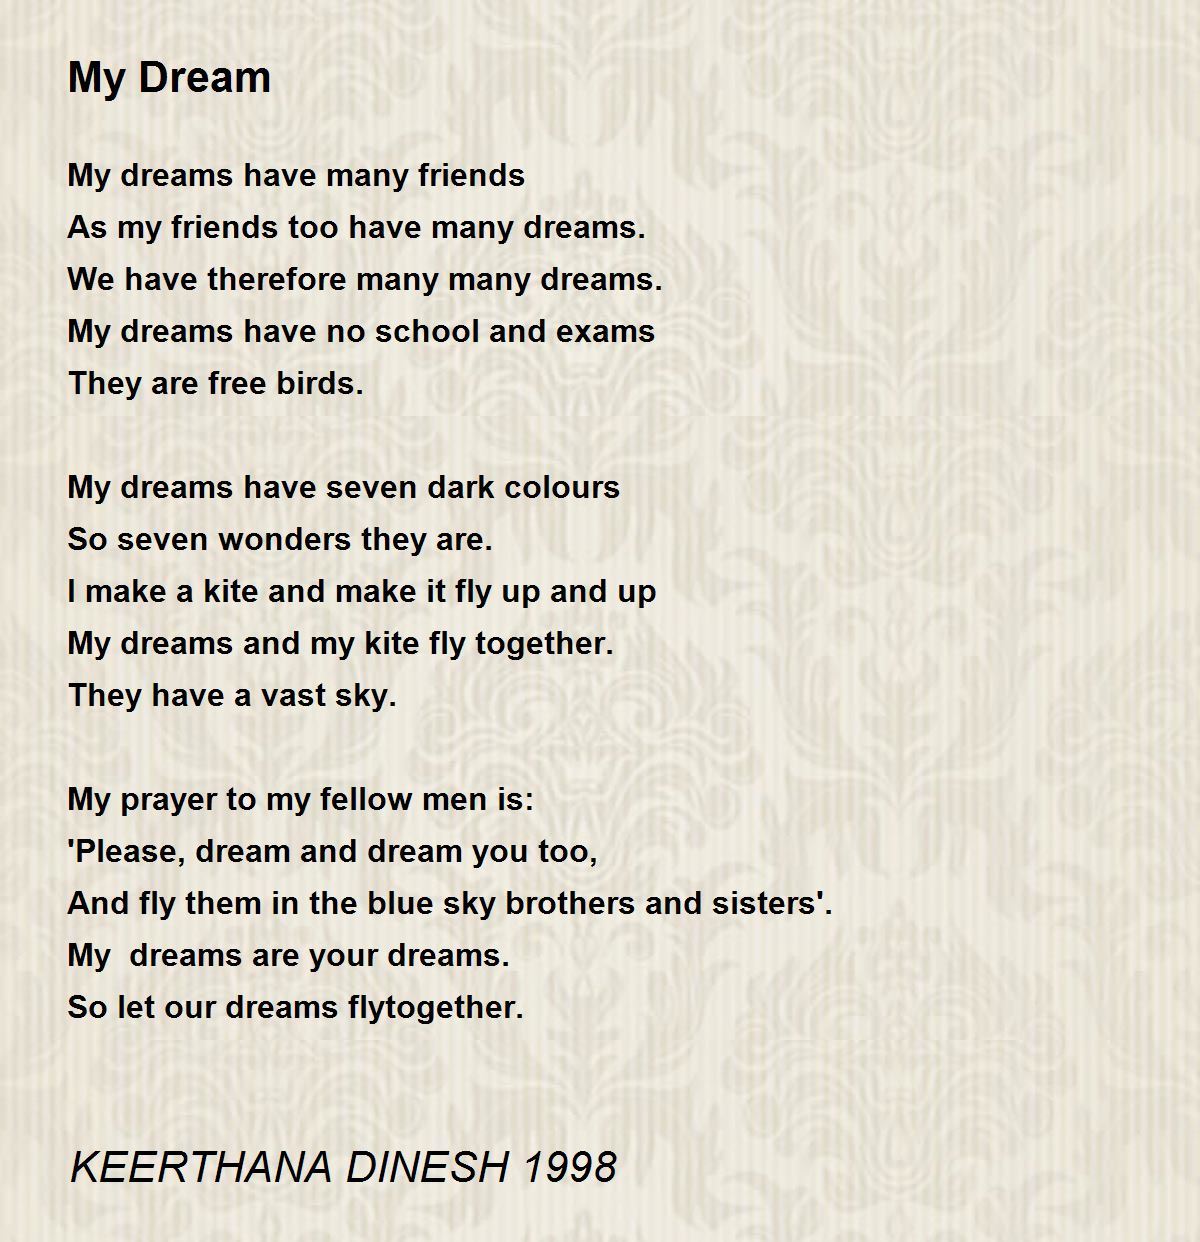 My Dream - My Dream Poem by KEERTHANA DINESH 1998